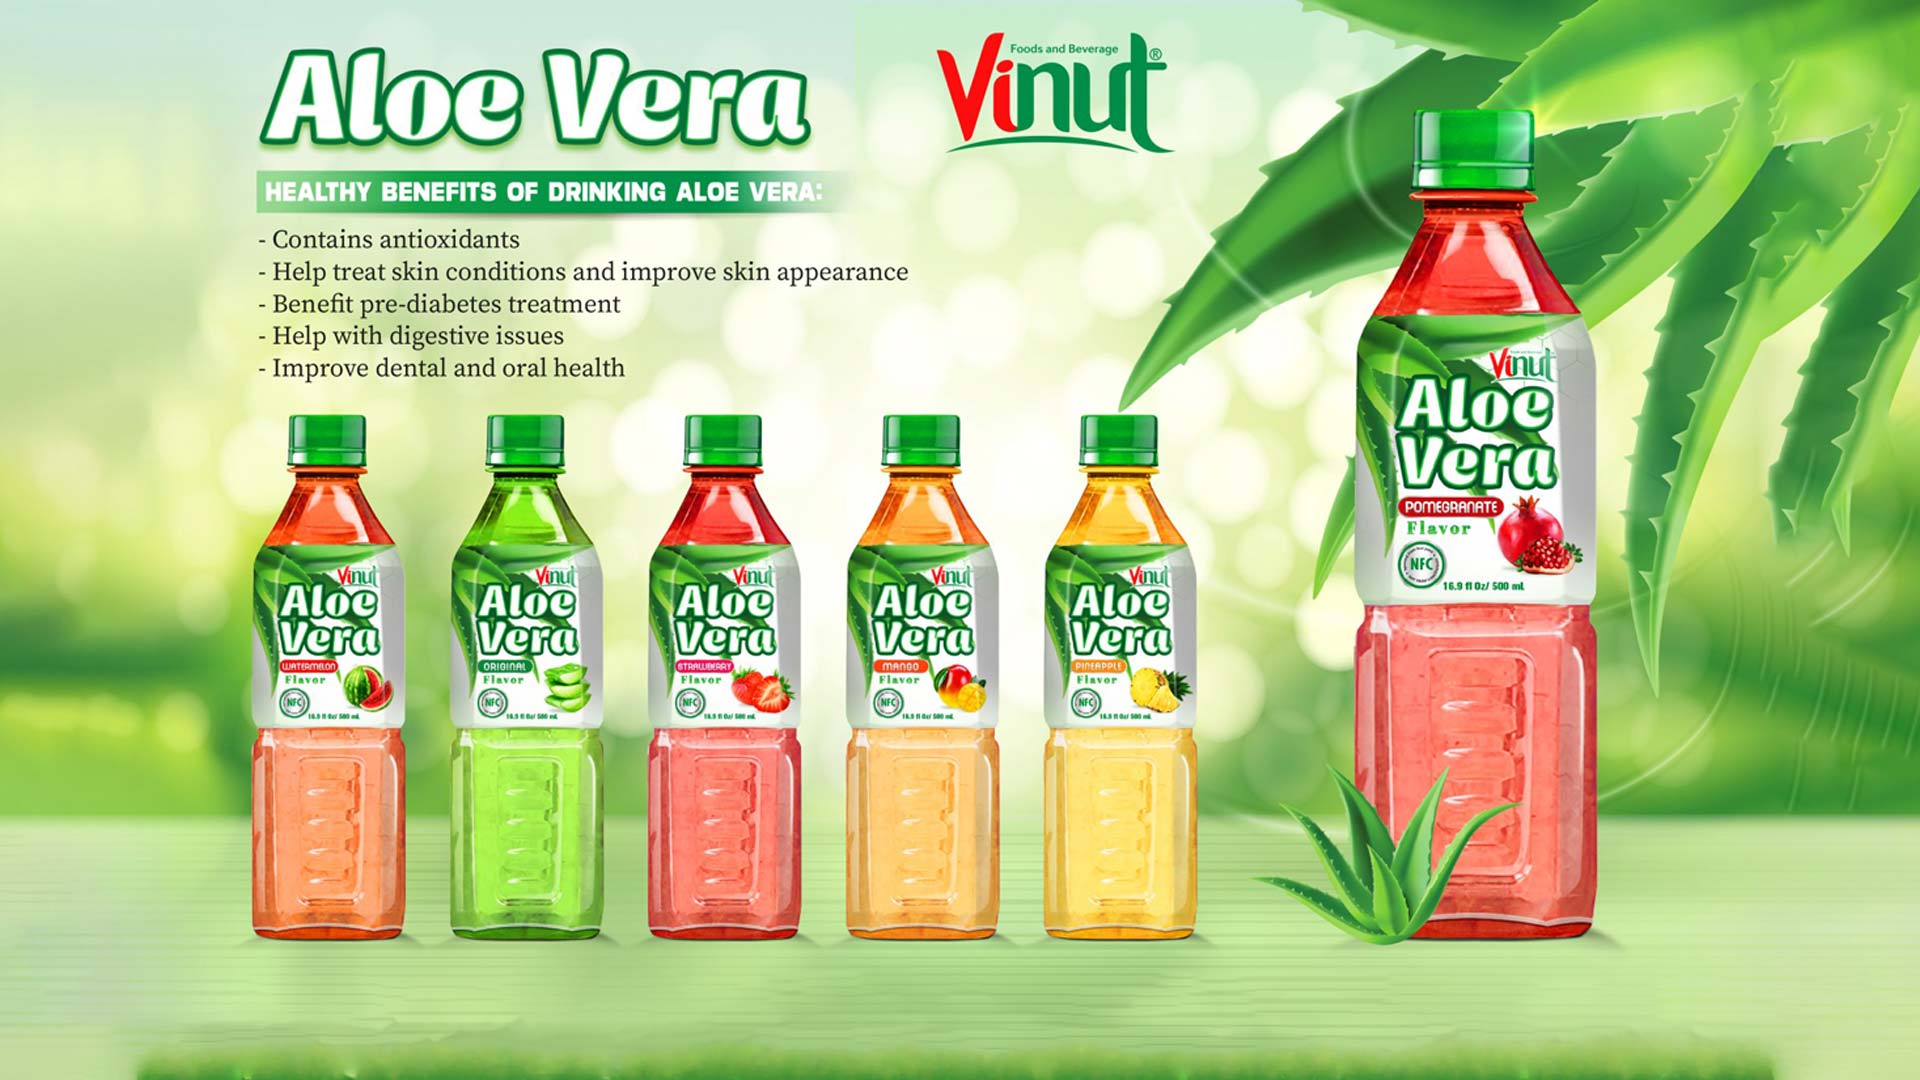 vinut aloe vera with fruit juice banner v1